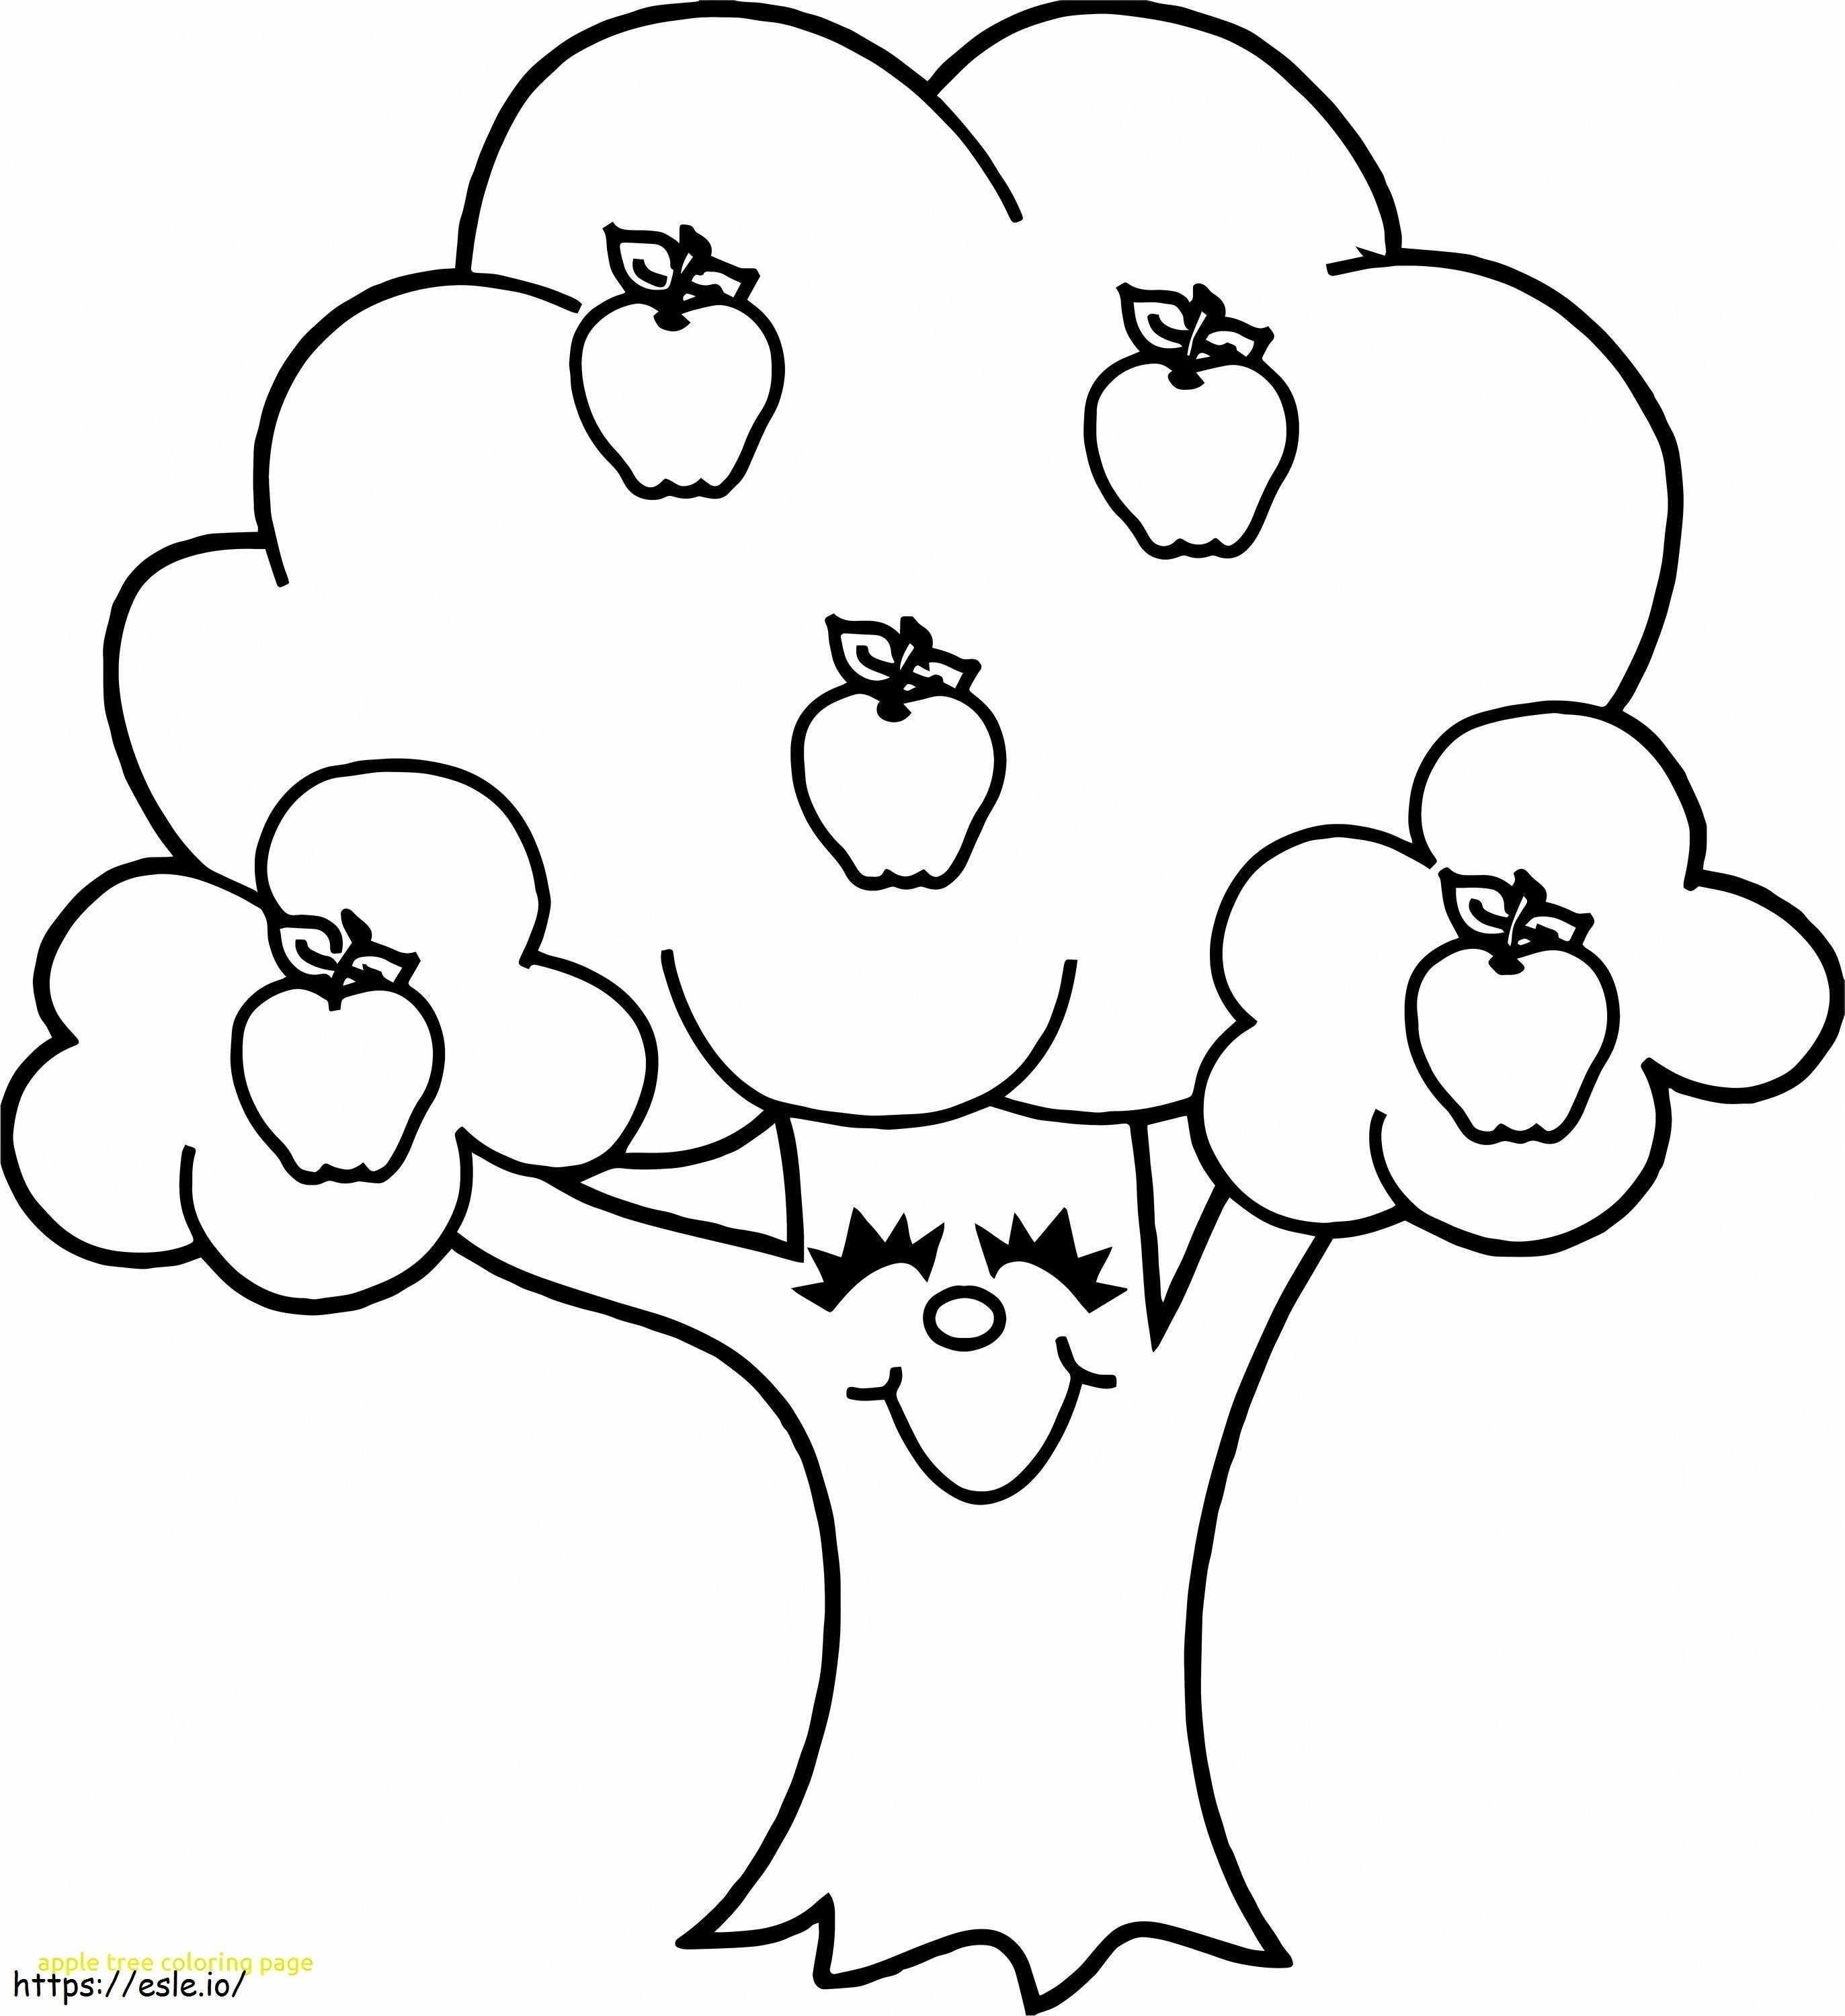 1544147602 Volledige appelboom met grappig kleurplaat kleurplaat